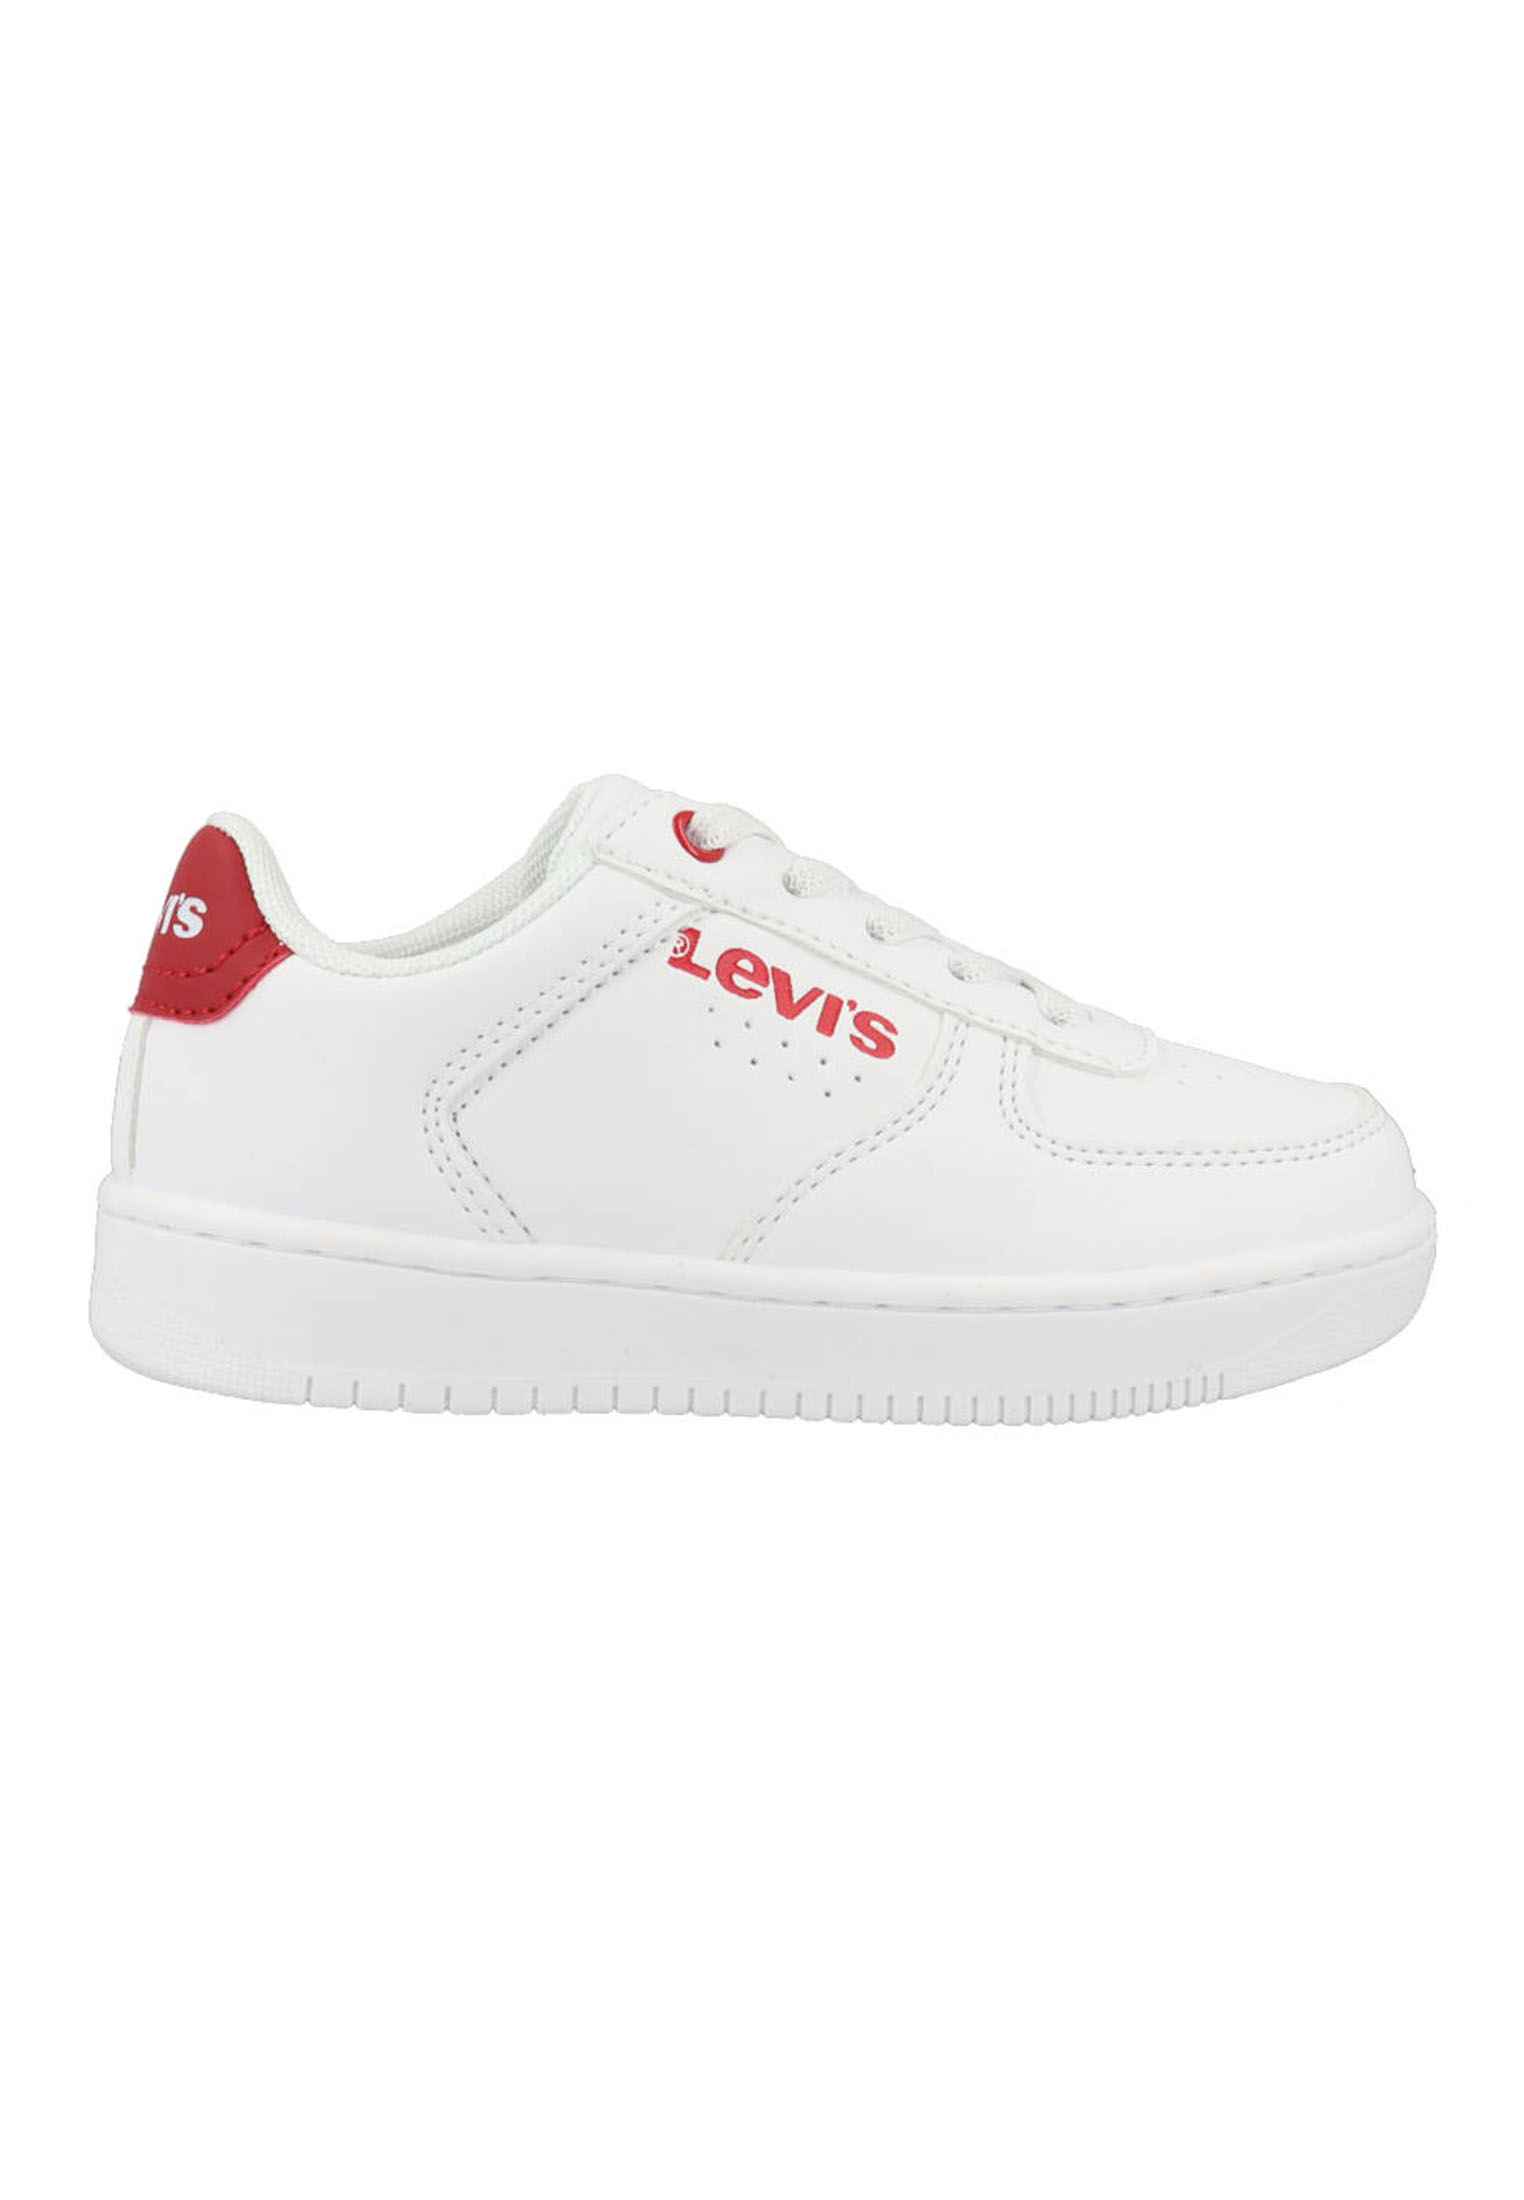 Levi's - Sneaker - Kids - White-Red - 29 - Sneakers